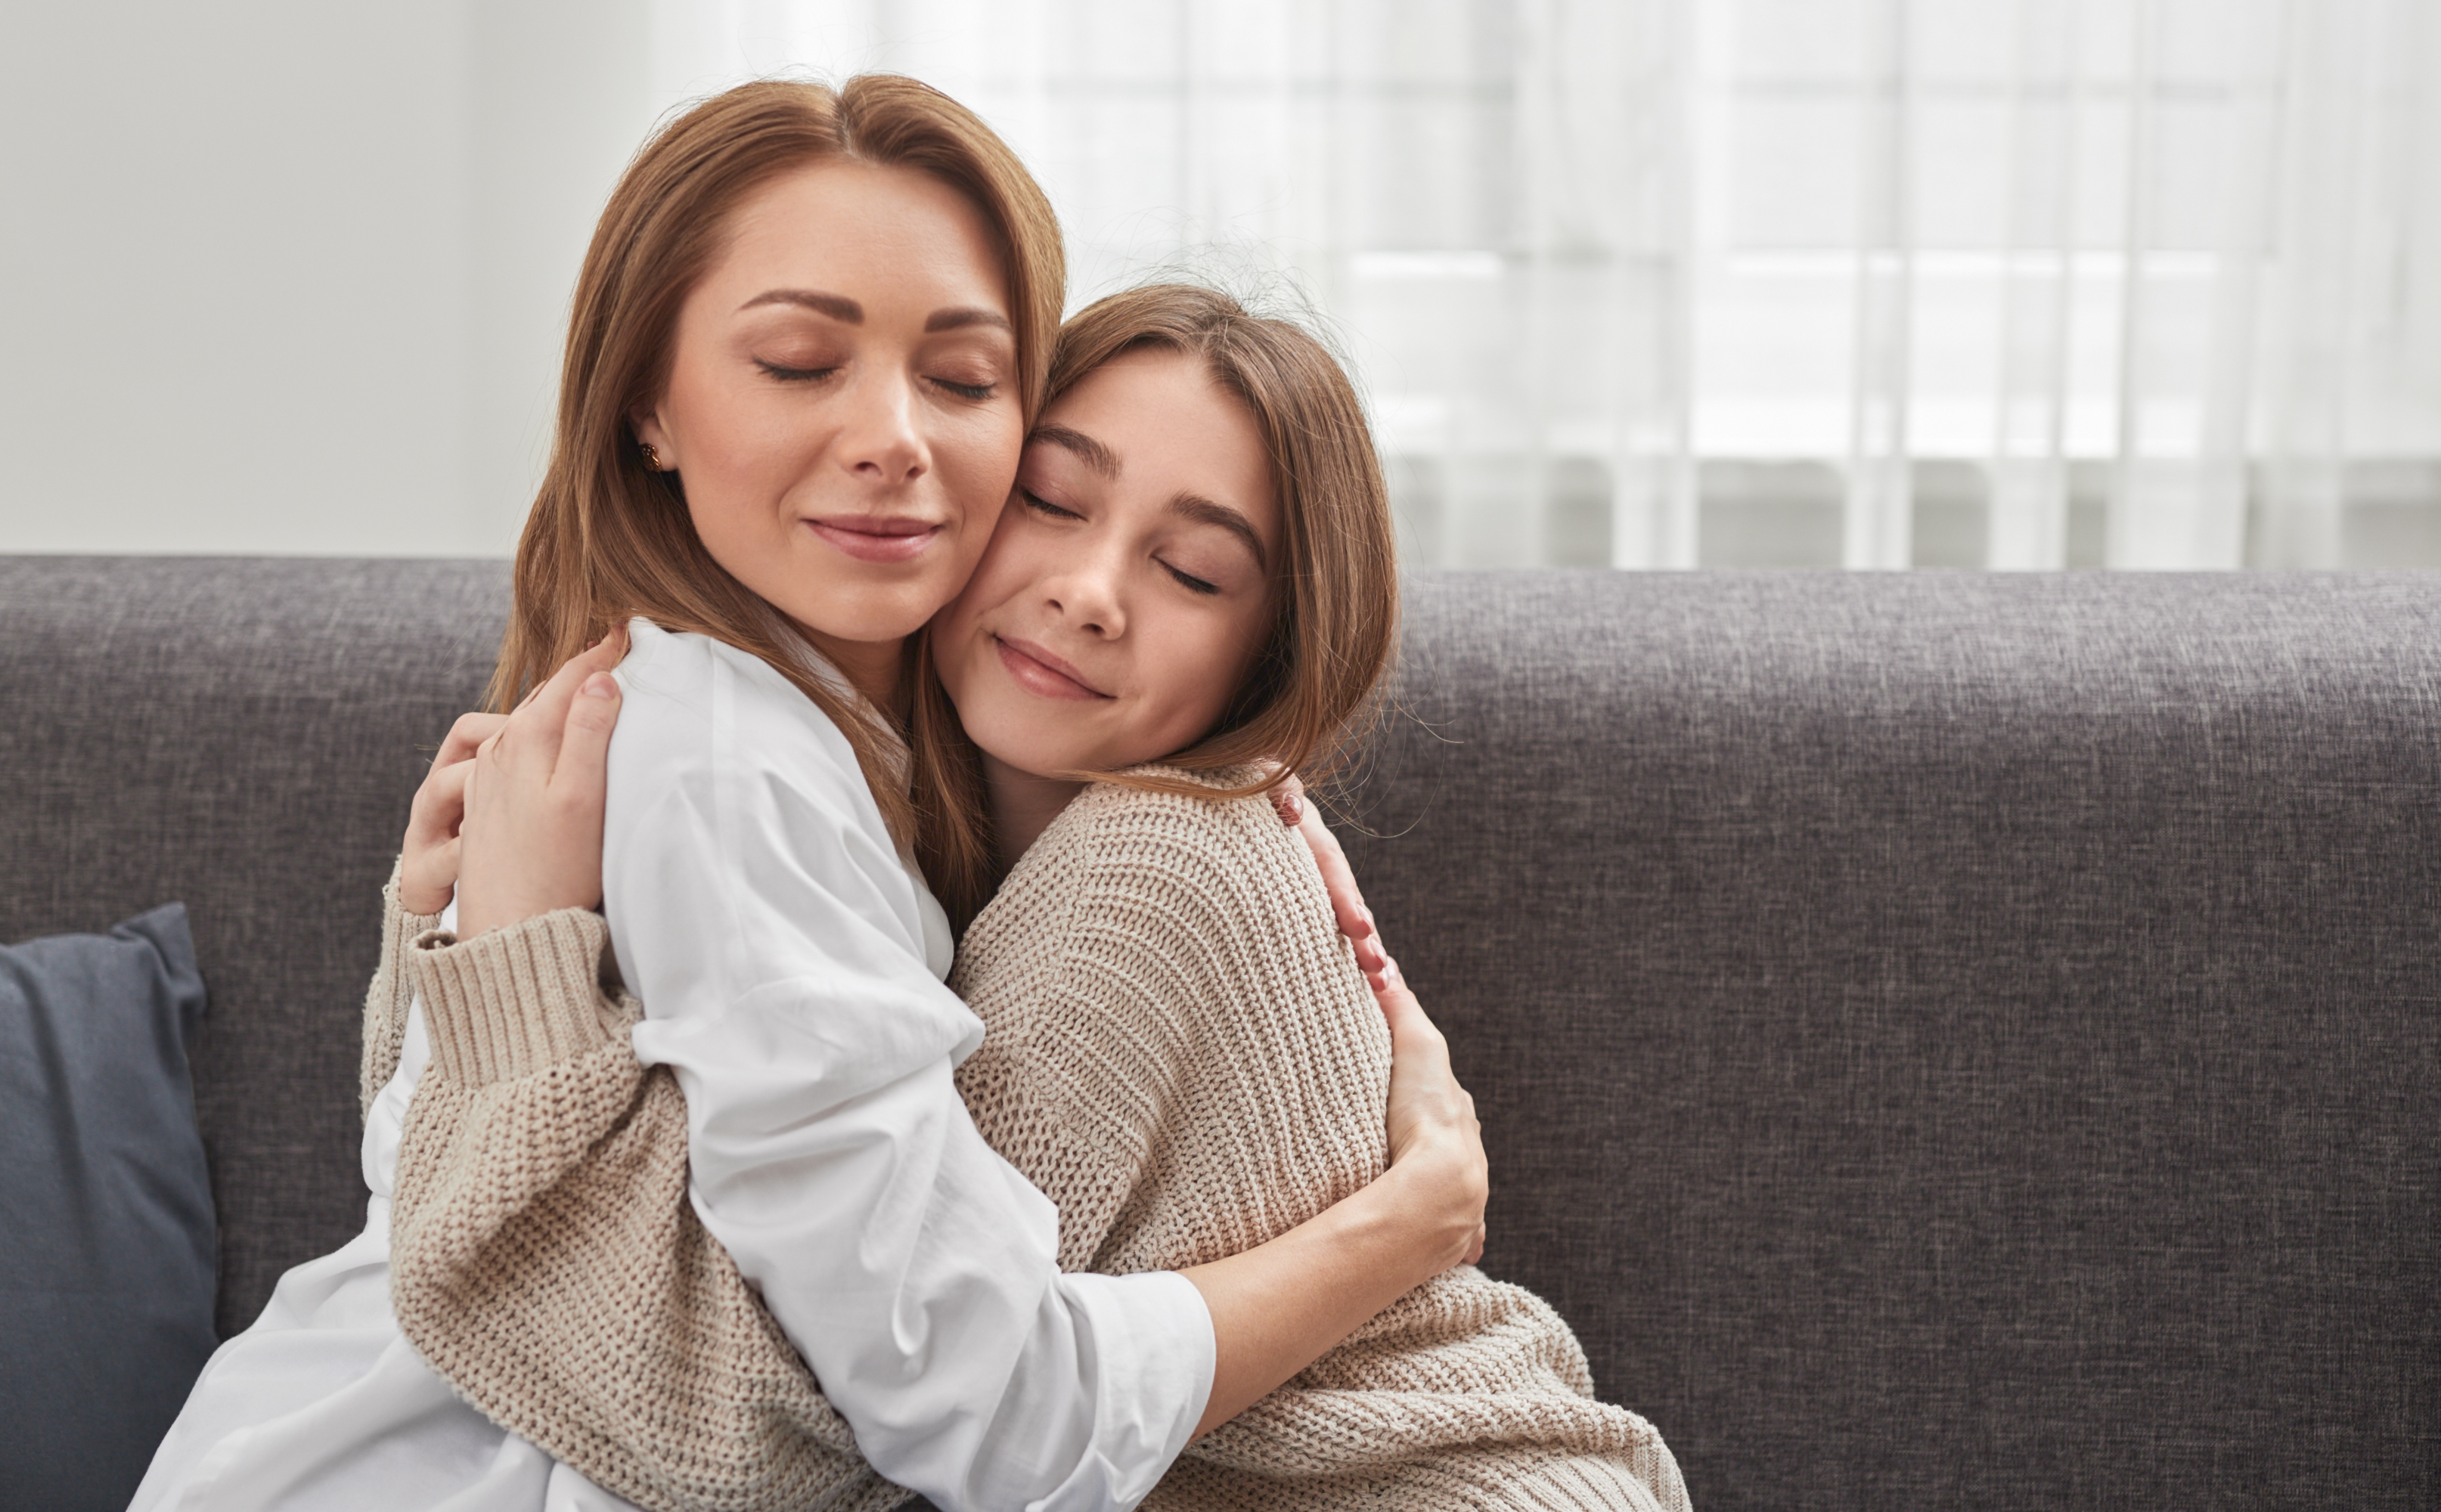 A woman hugs her teenage daughter | Source: Shutterstock